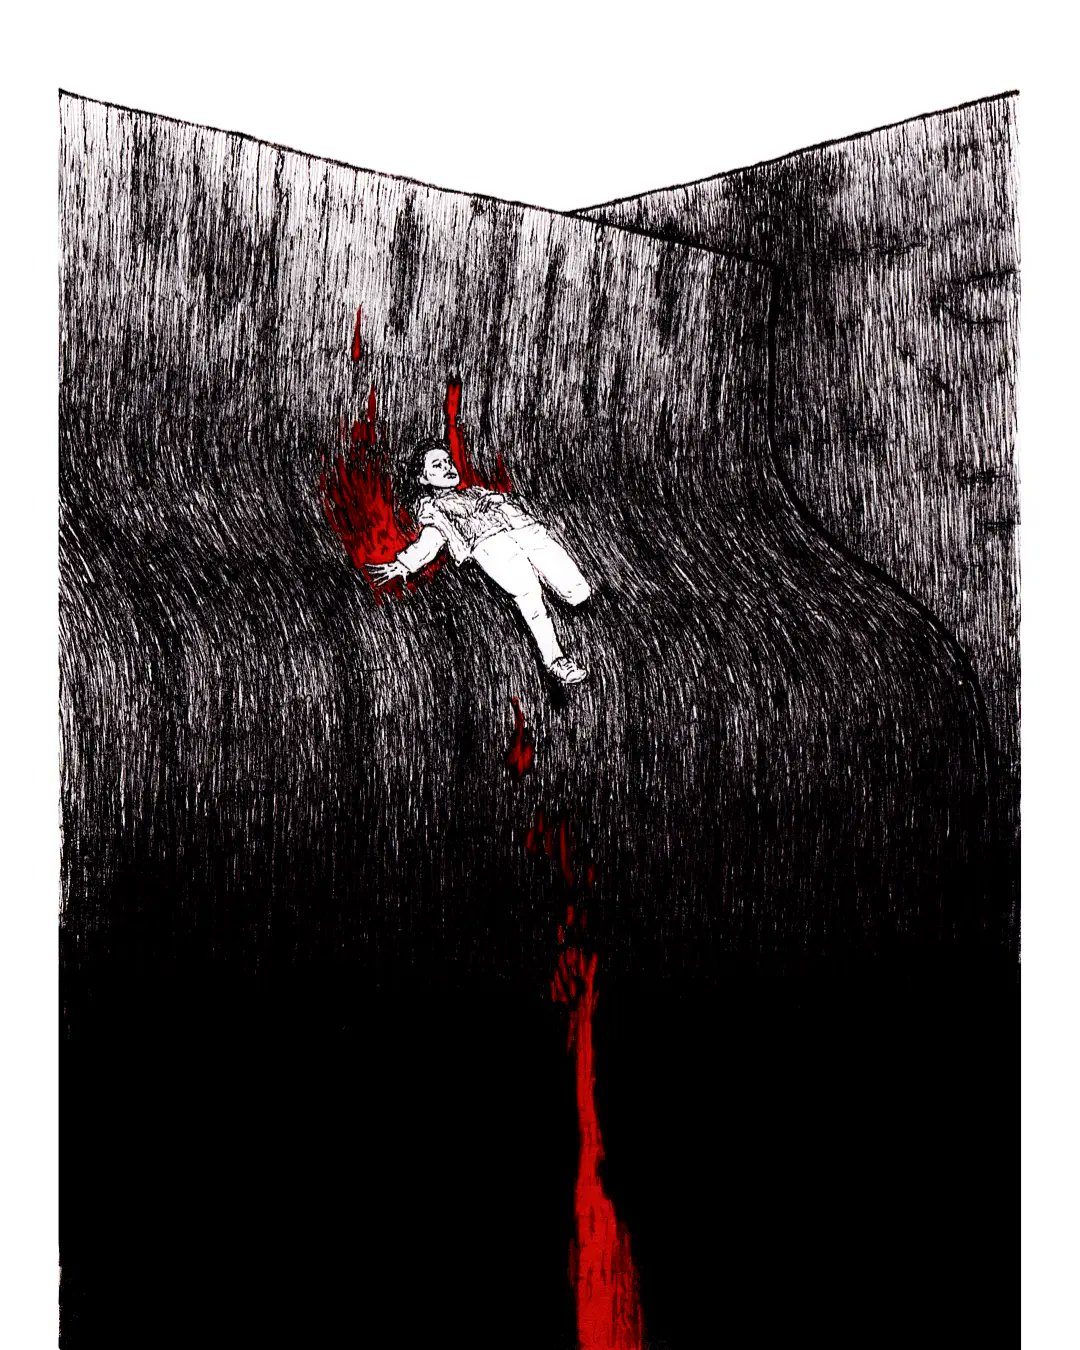 James M. Macleod on X: #Horrortober2021 Day 3 - Tim Egan's  (@PunxsutawnyPhil) Curve  / X